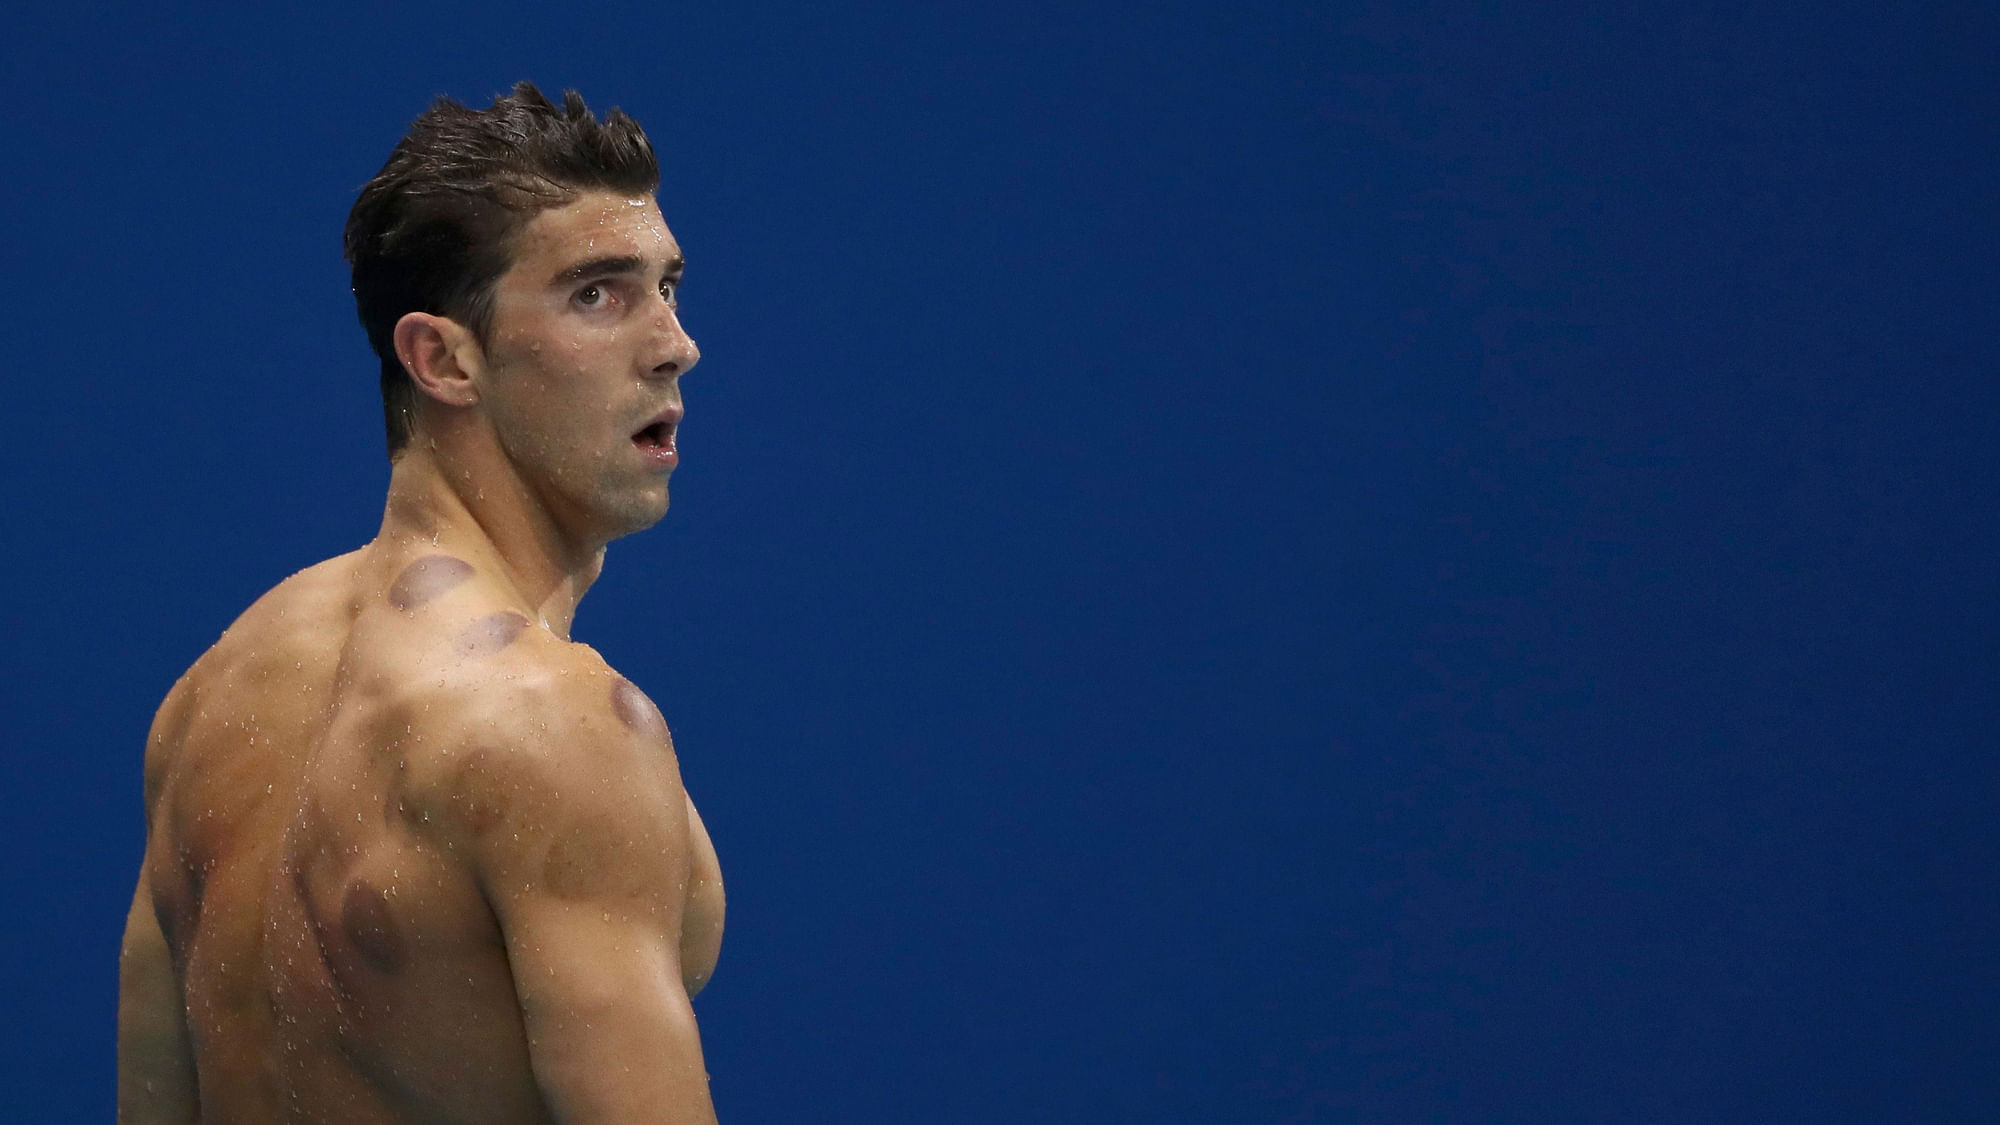 Michael Phelps turns 32 on 30 June.